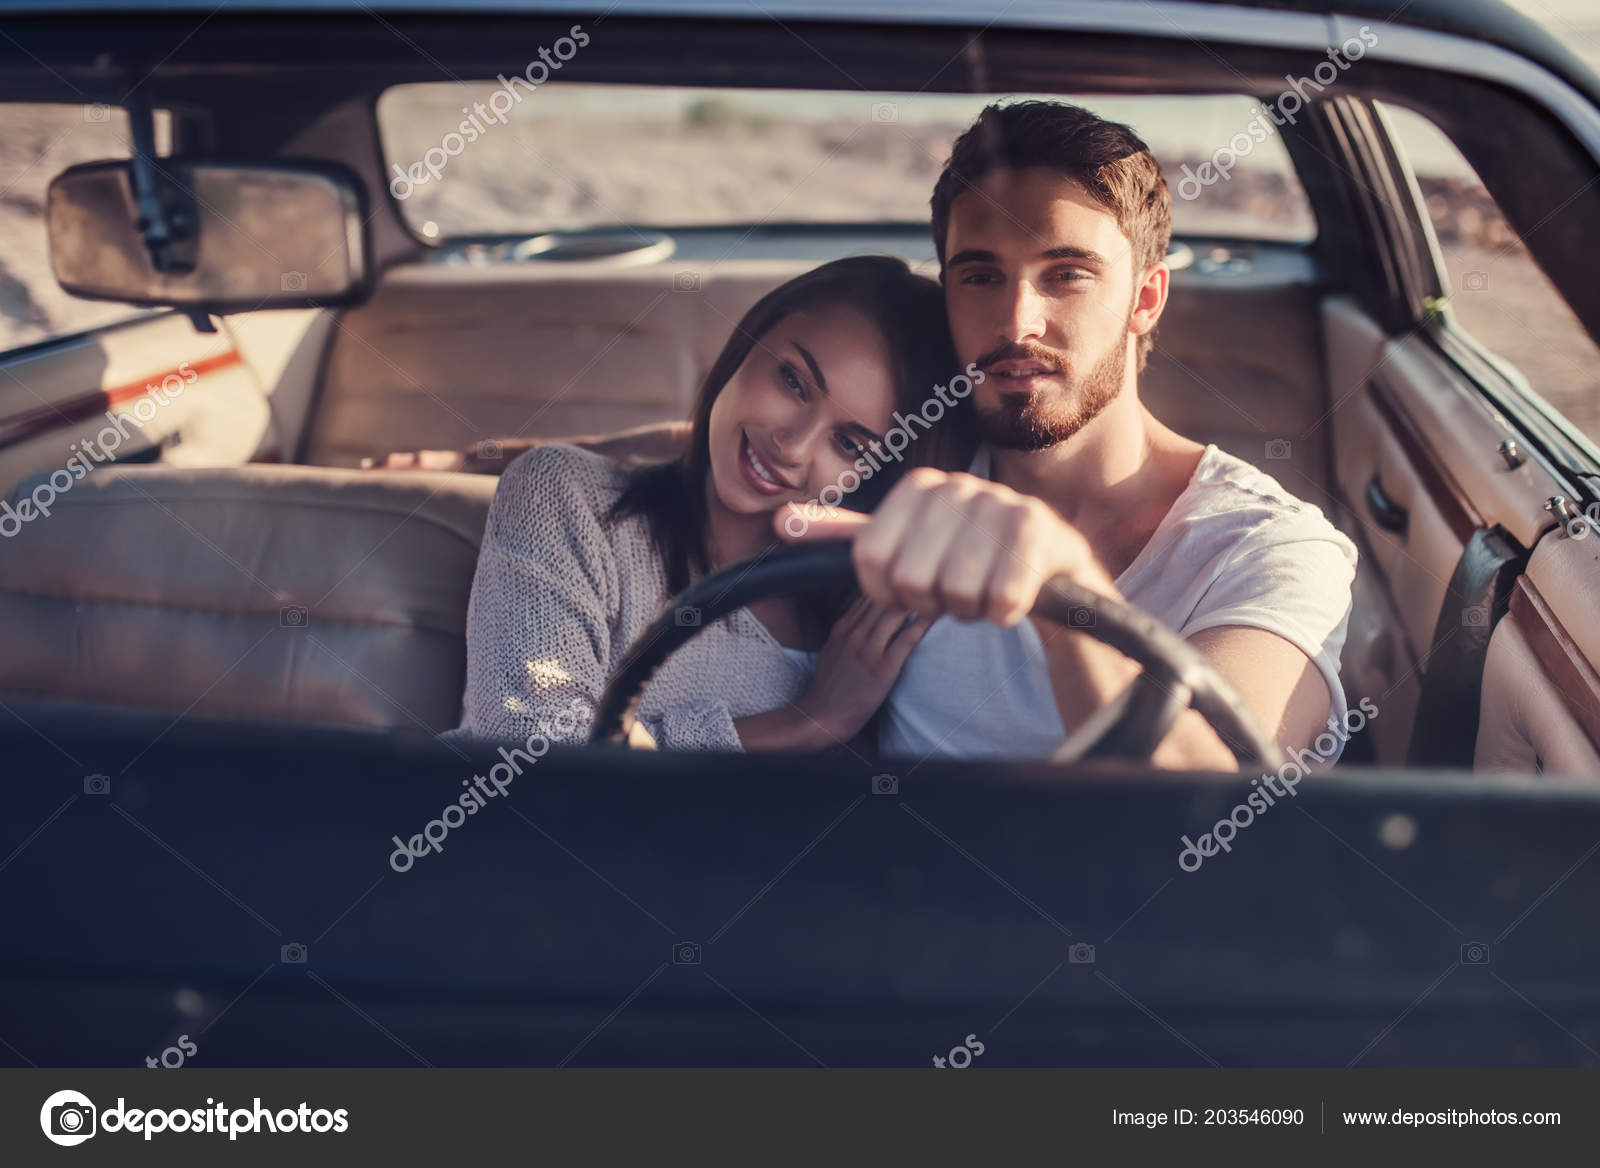 Romantic Couple Sitting Green Retro Car Beach Handsome Bearded Man Stock Photo C 4pmphoto Gmail Com 203546090